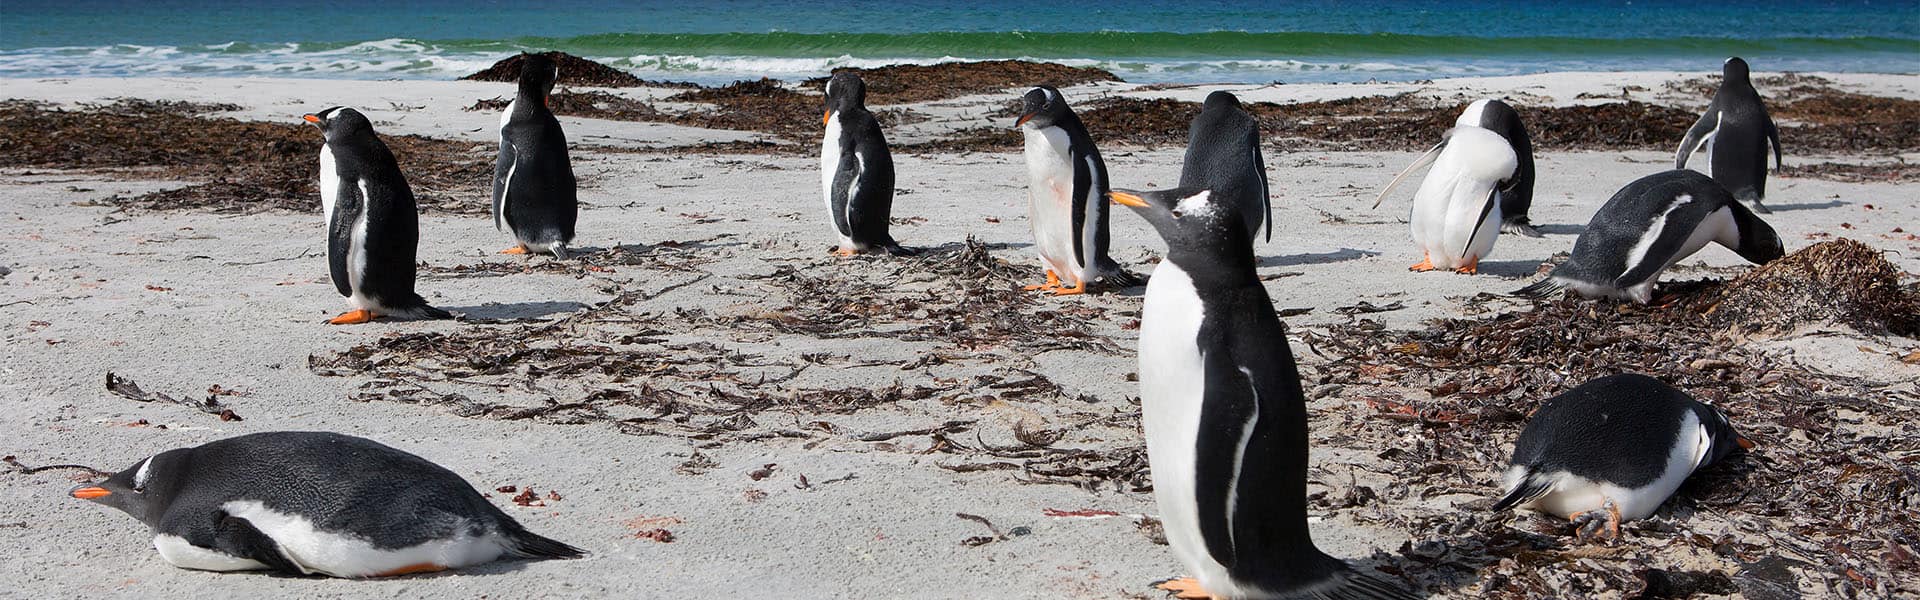 Antarctica & South America: Argentina, Falkland Islands & Uruguay